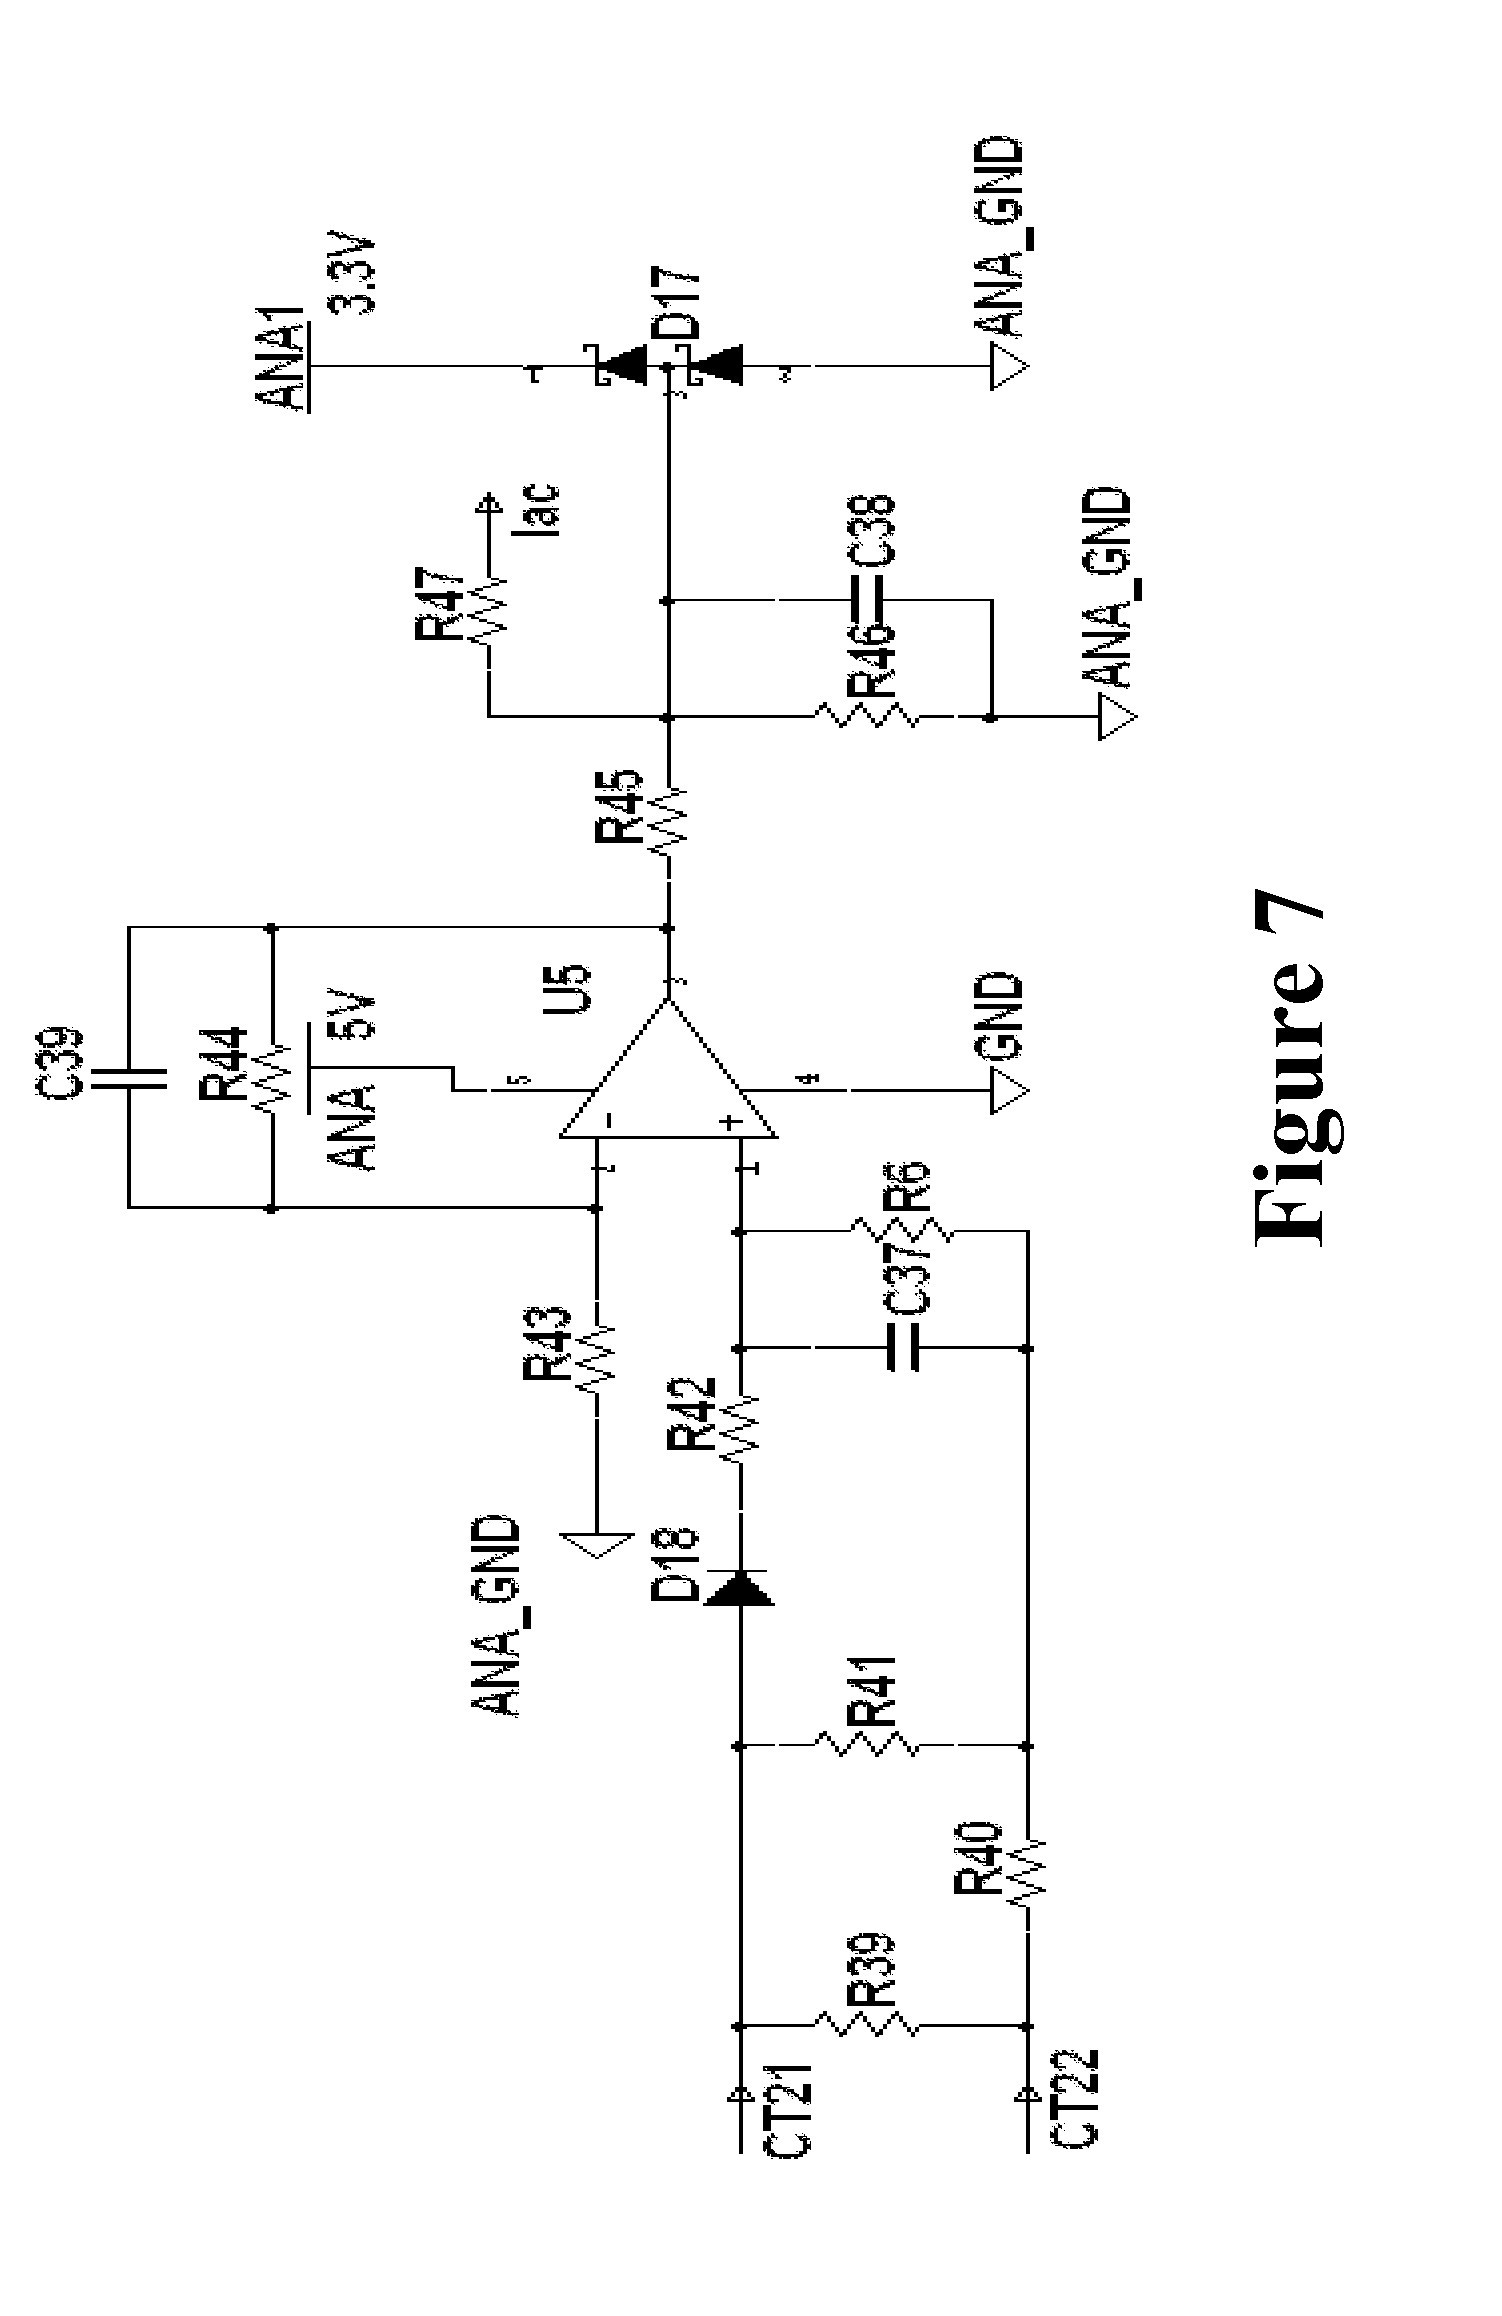 Inverter Basic Circuit Diagram Fresh Ponent Series Circuit Diagrams for the Od Ldr Diagram Build